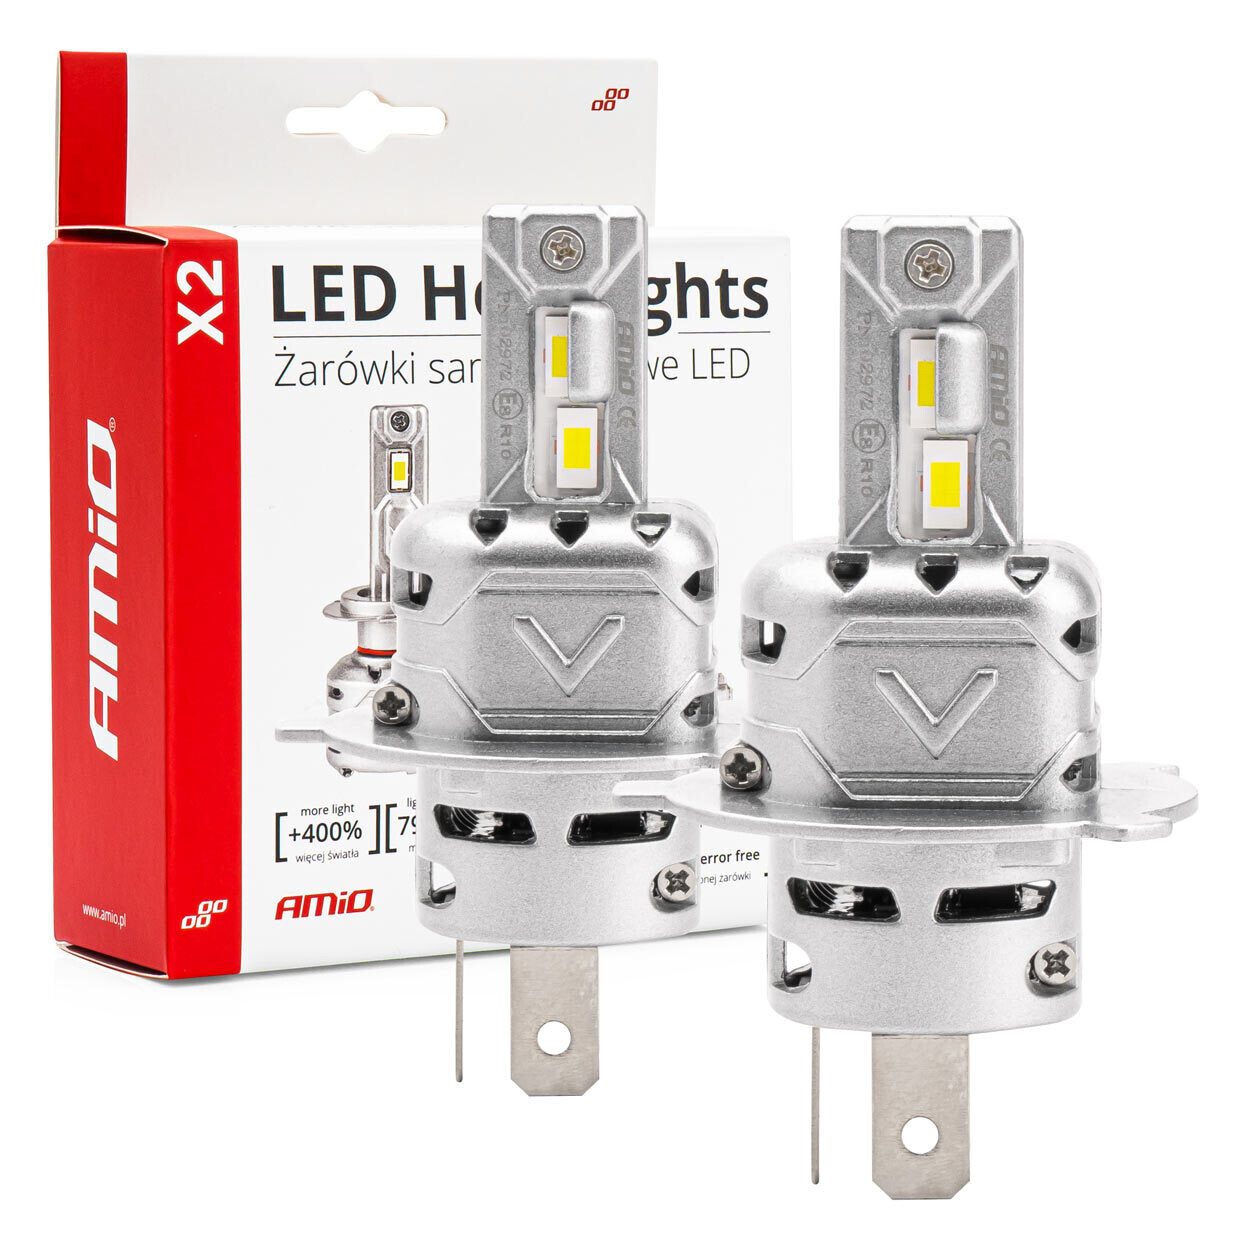 LED Headlight H4 X2 Series AMiO